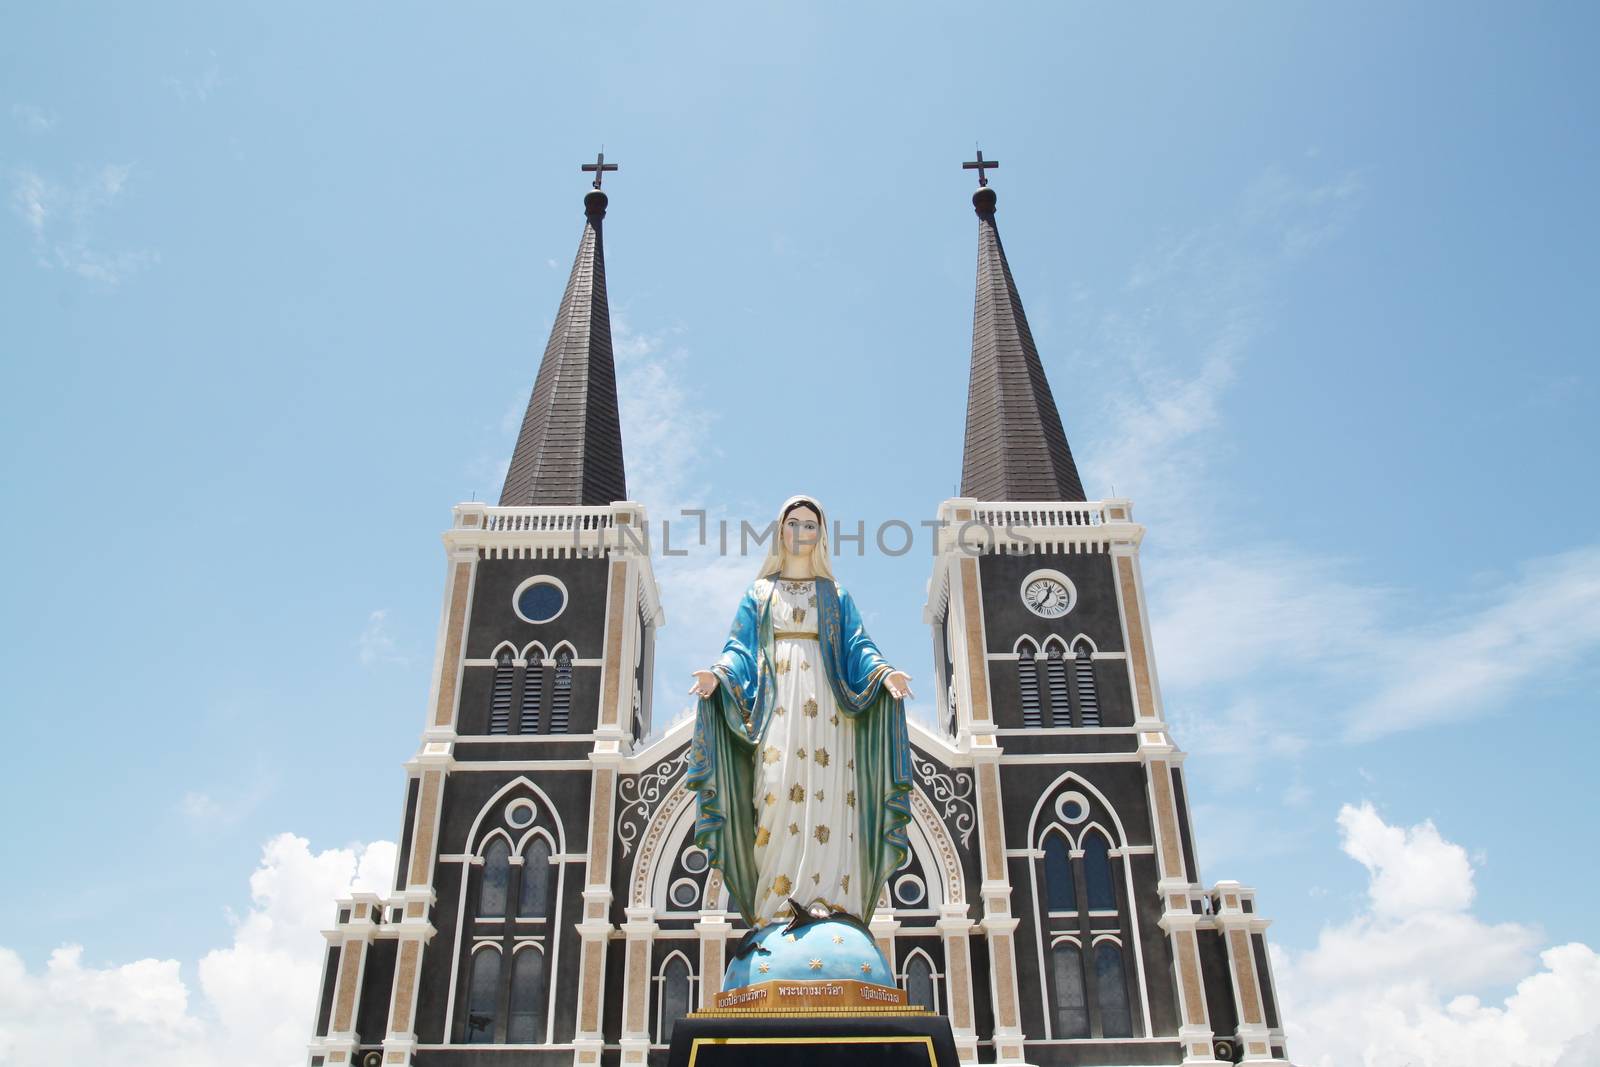 Church in Thailand by pumppump